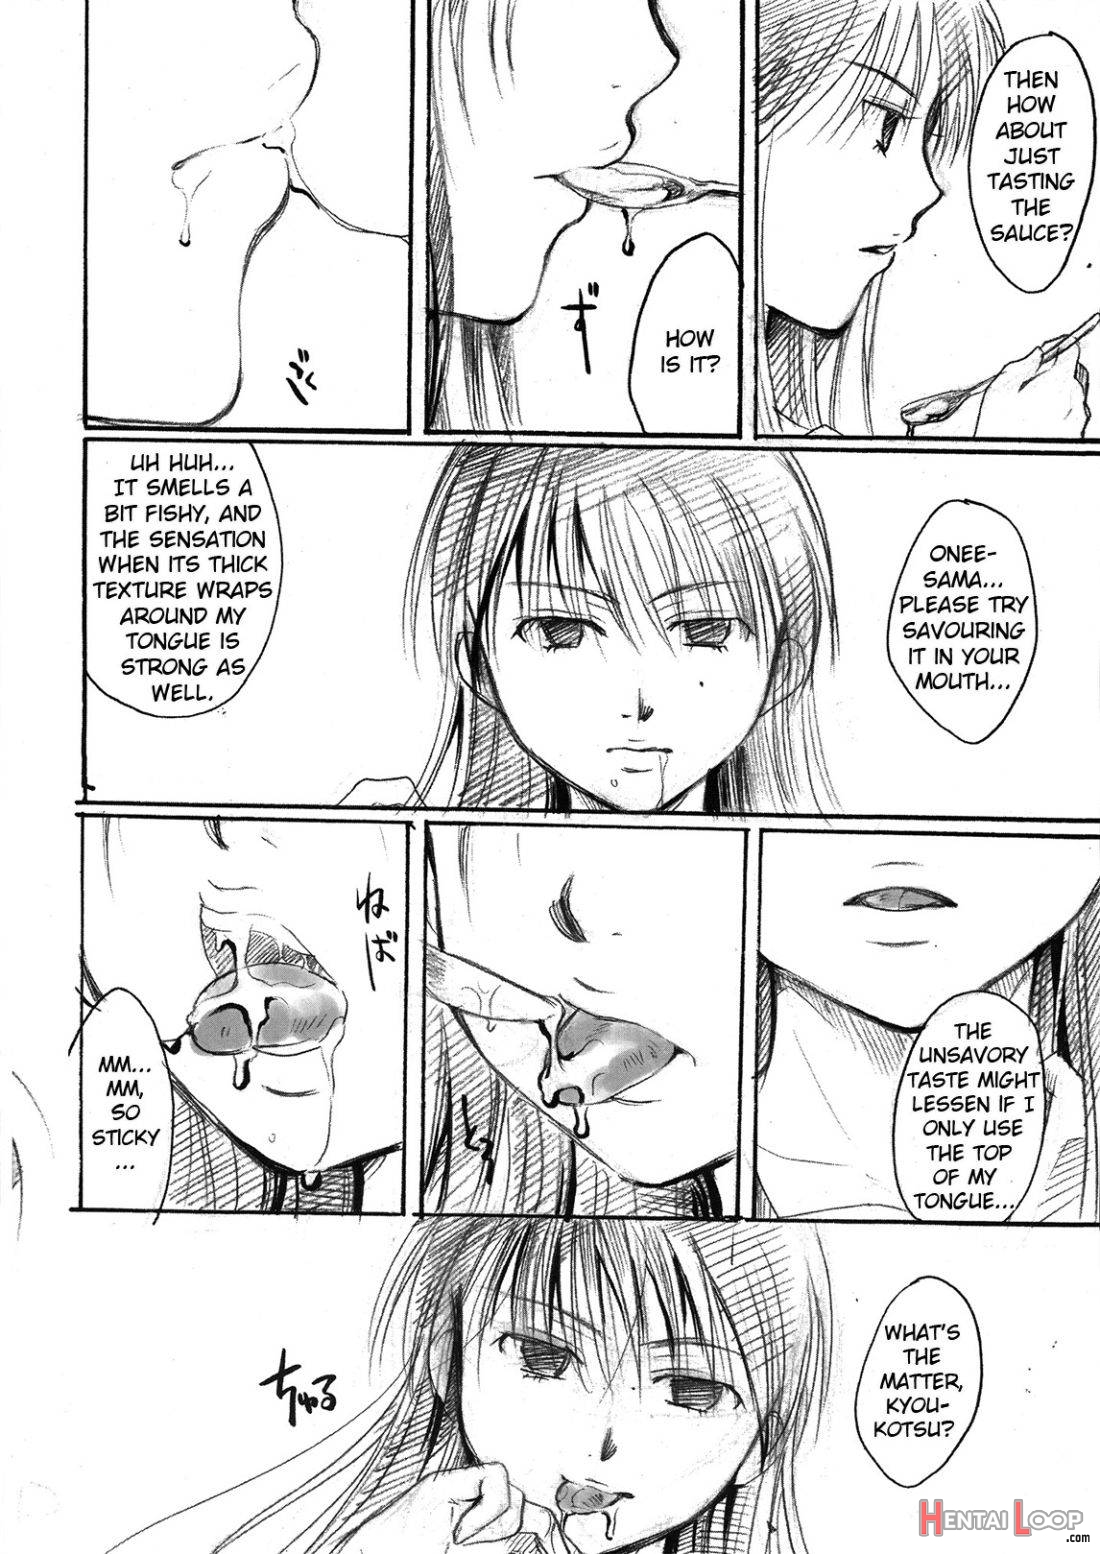 Kitsune-sama’s Dinnertime page 13